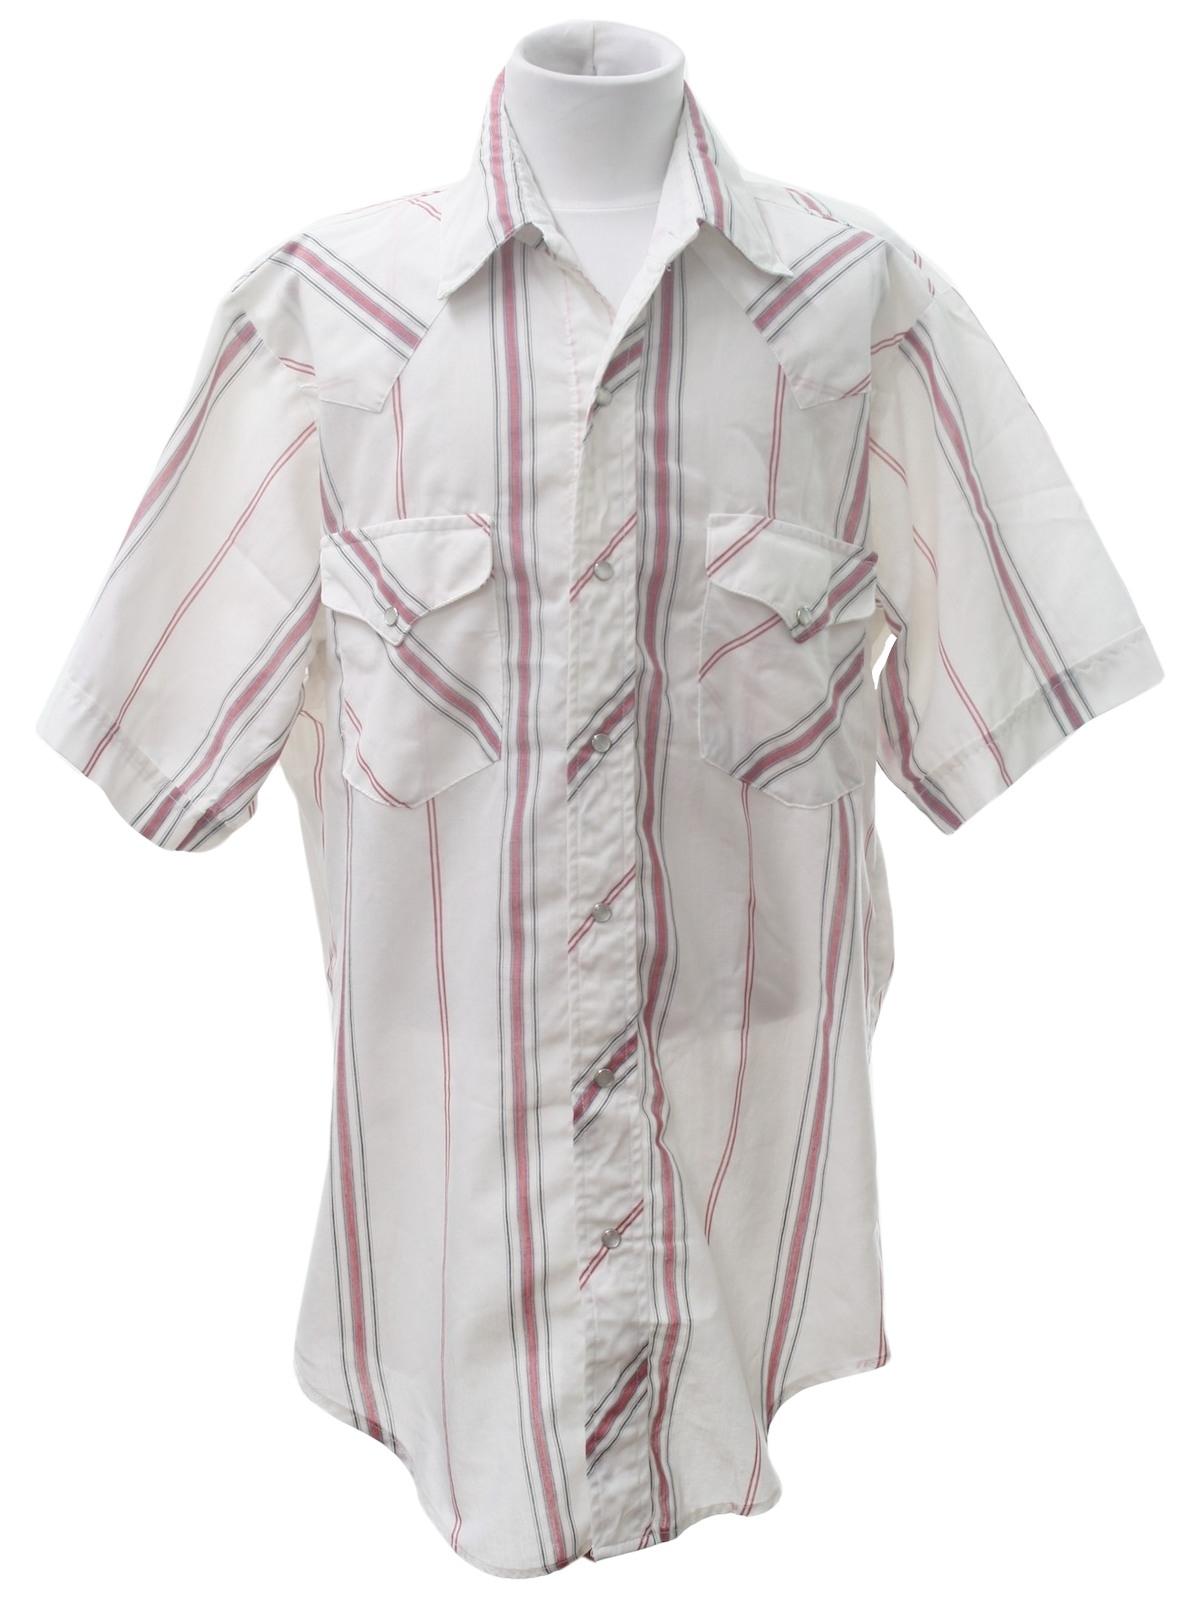 Louis Vuitton White Printed Cotton Blend Long Sleeve Shirt S at